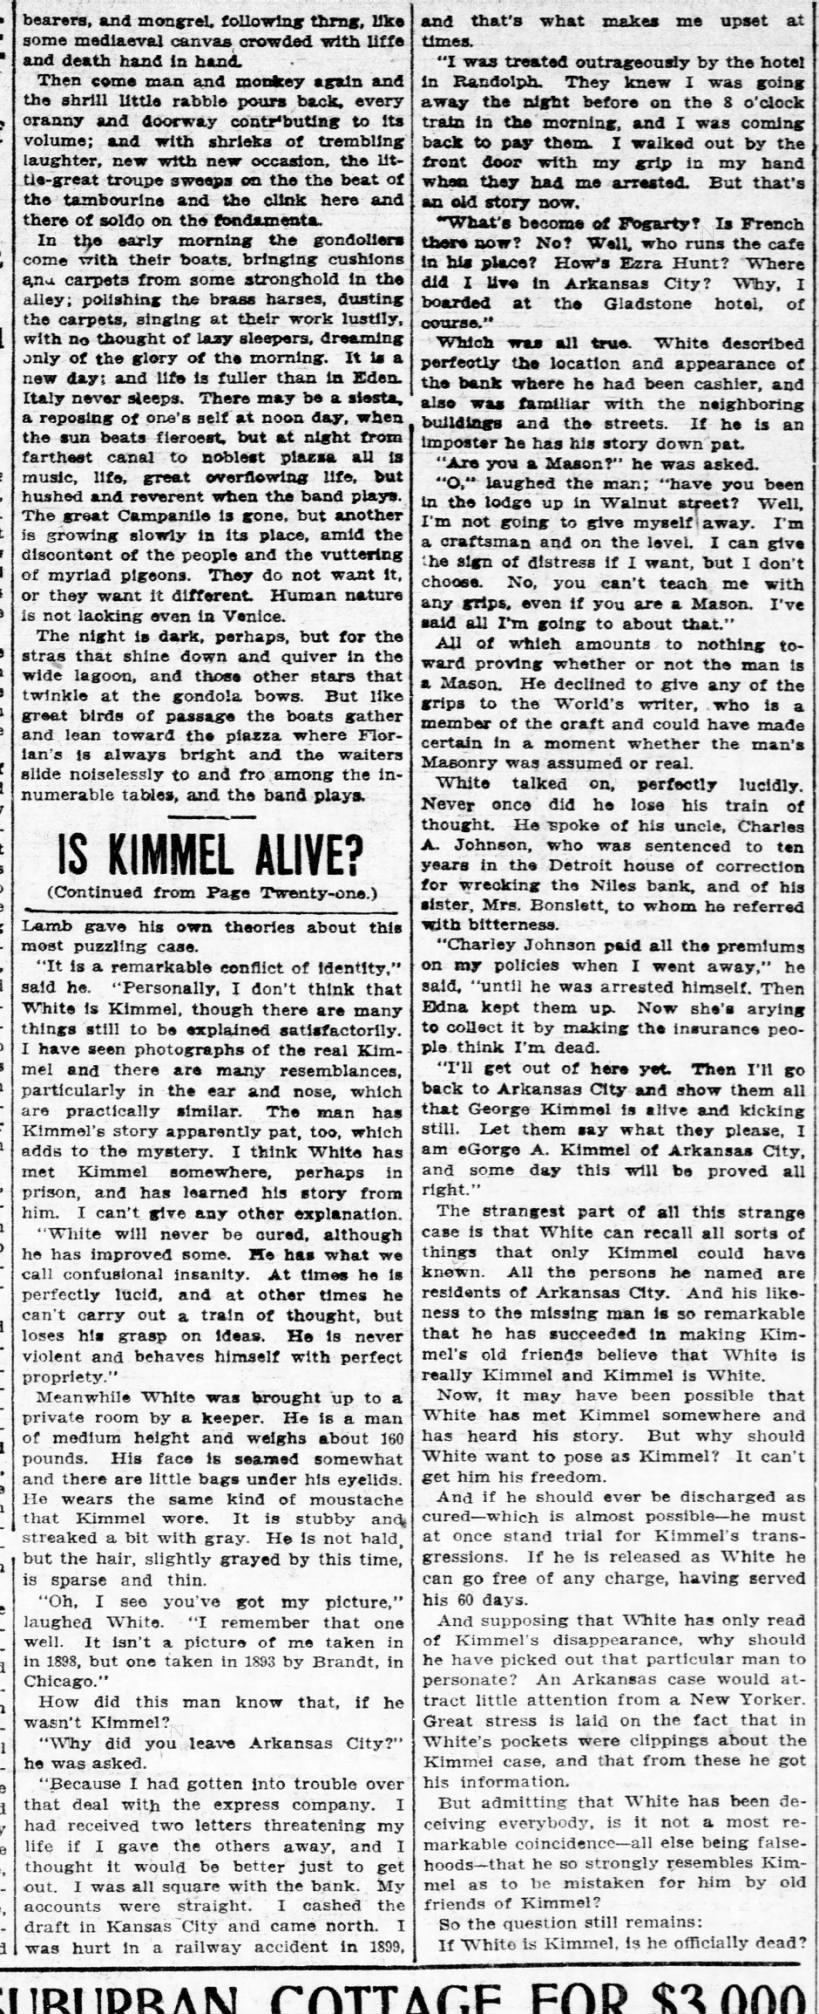 November 11, 1906
The Wichita Daily Eagle
Wichita, Kansas page 24